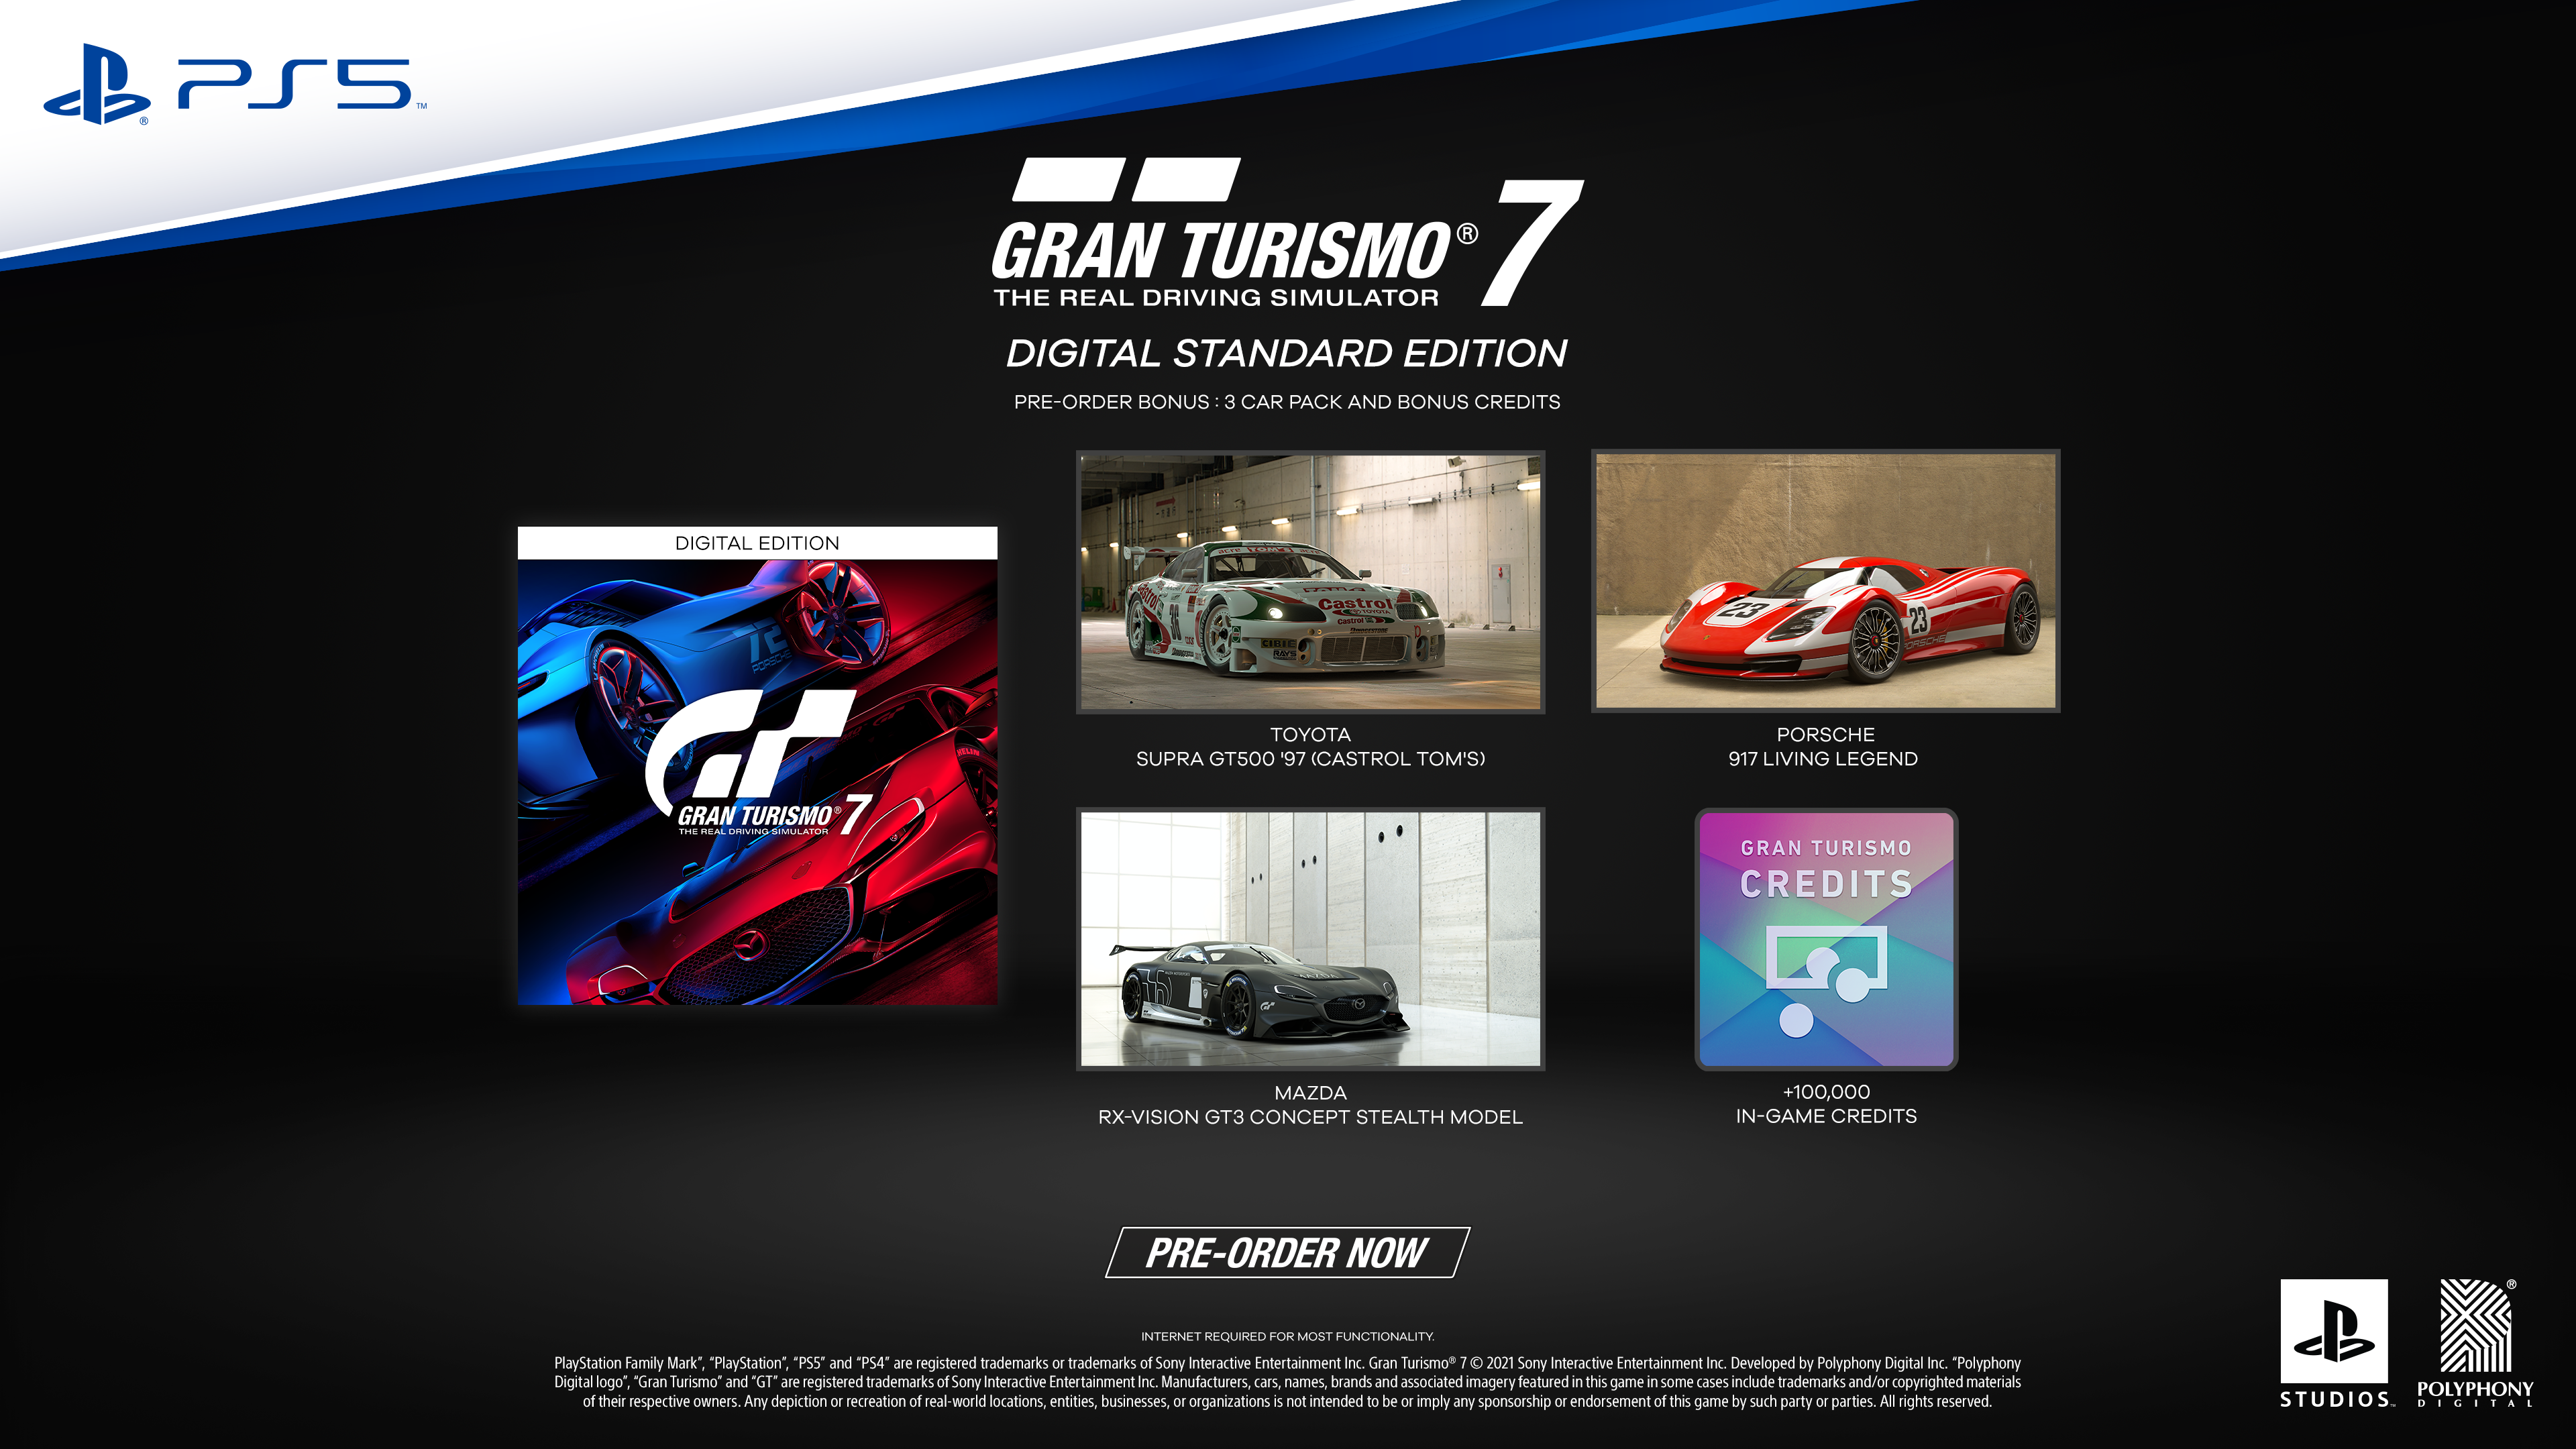 Gran Turismo 7 PlayStation 4 Latam